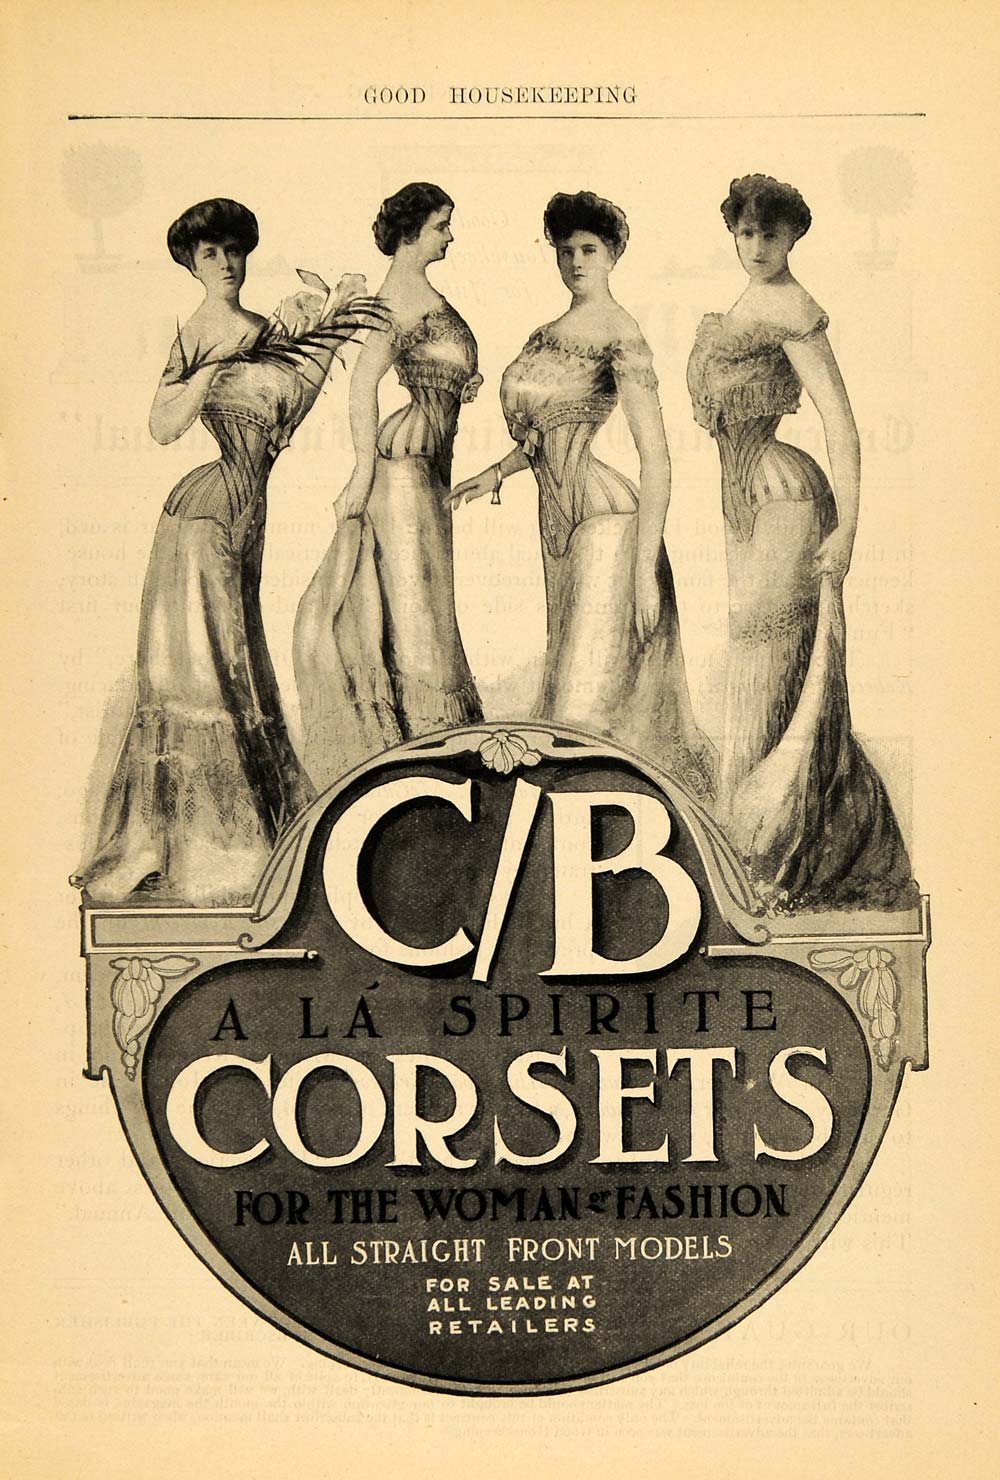 1904 Ad Corsets C/B A La Spirite Women's Fashion - ORIGINAL ADVERTISING GH2